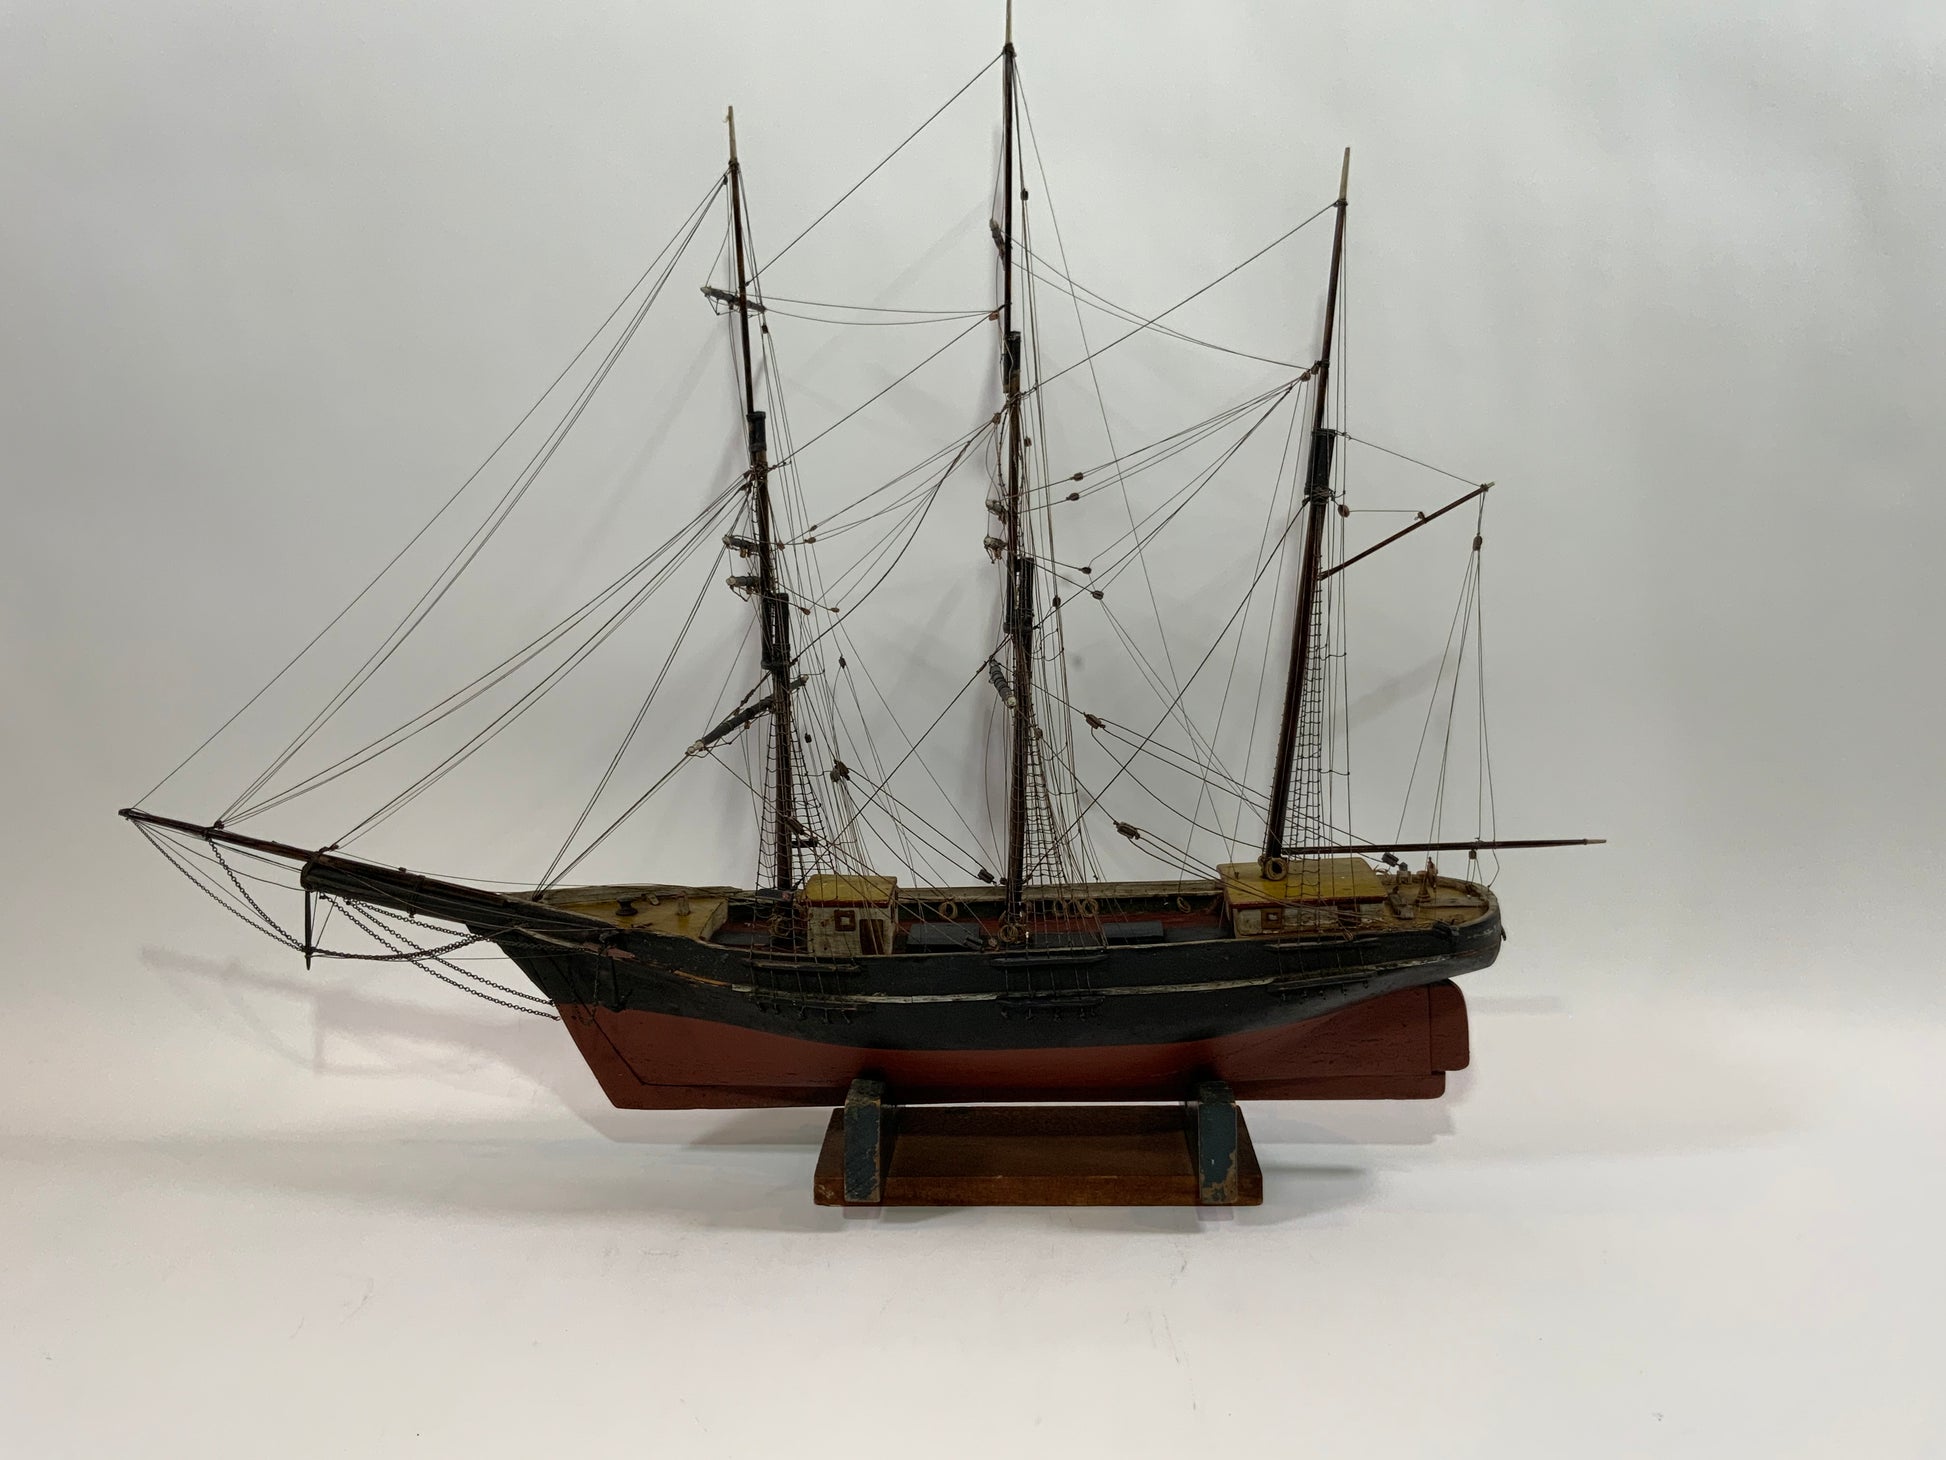 Antique Ship Model of an American Bark - Lannan Gallery